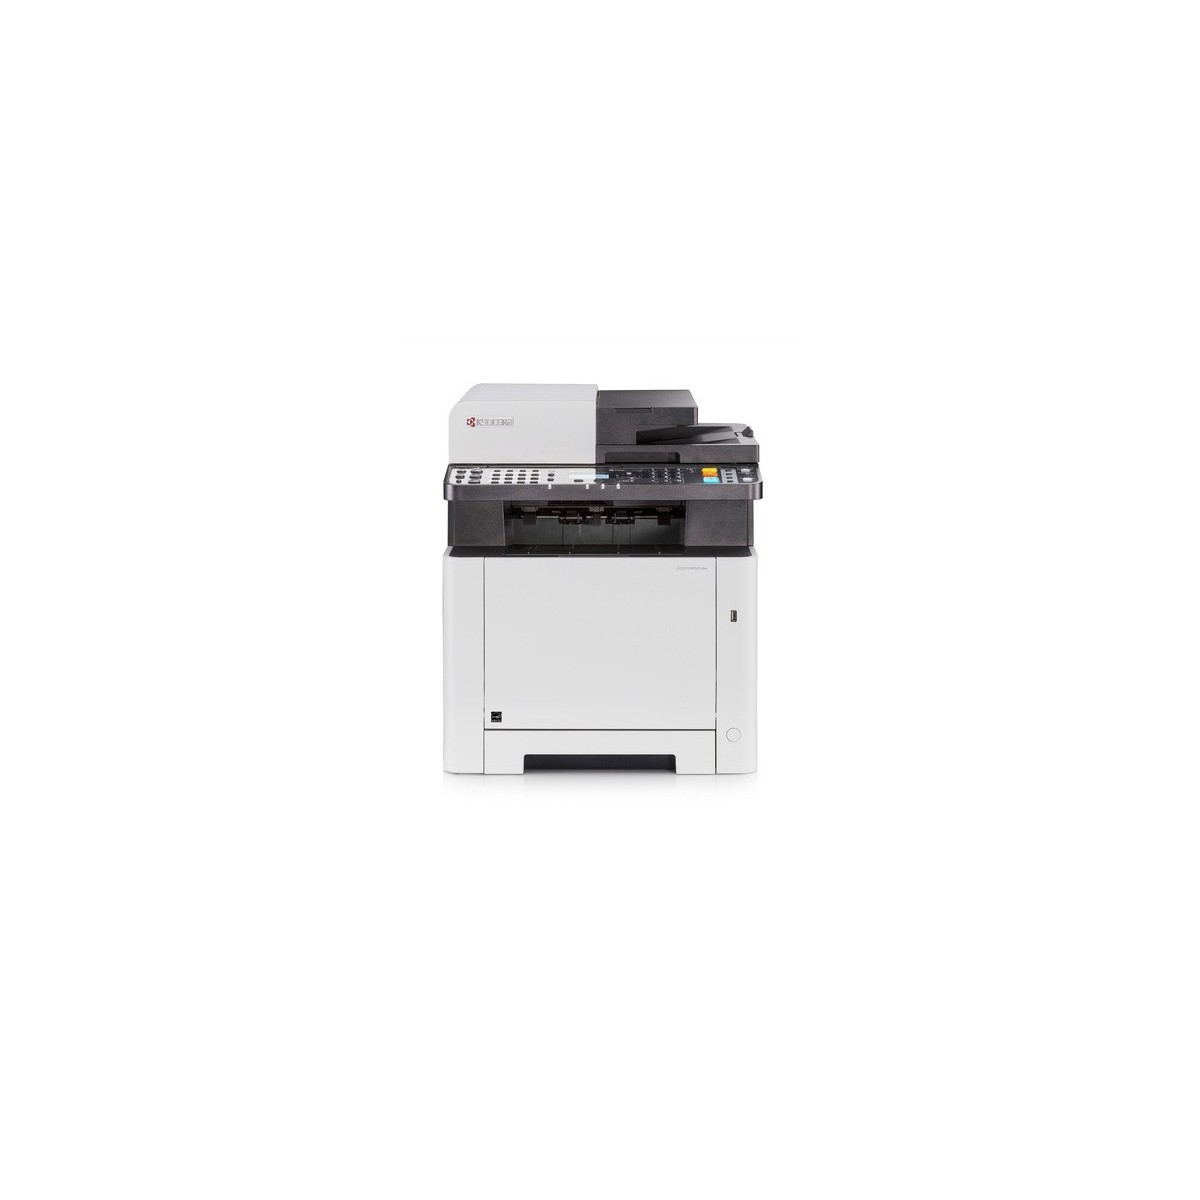 Kyocera ECOSYS M5521cdw/KL3 - Laser - Colour printing - 9600 x 600 DPI - A4 - Direct printing - Black - White